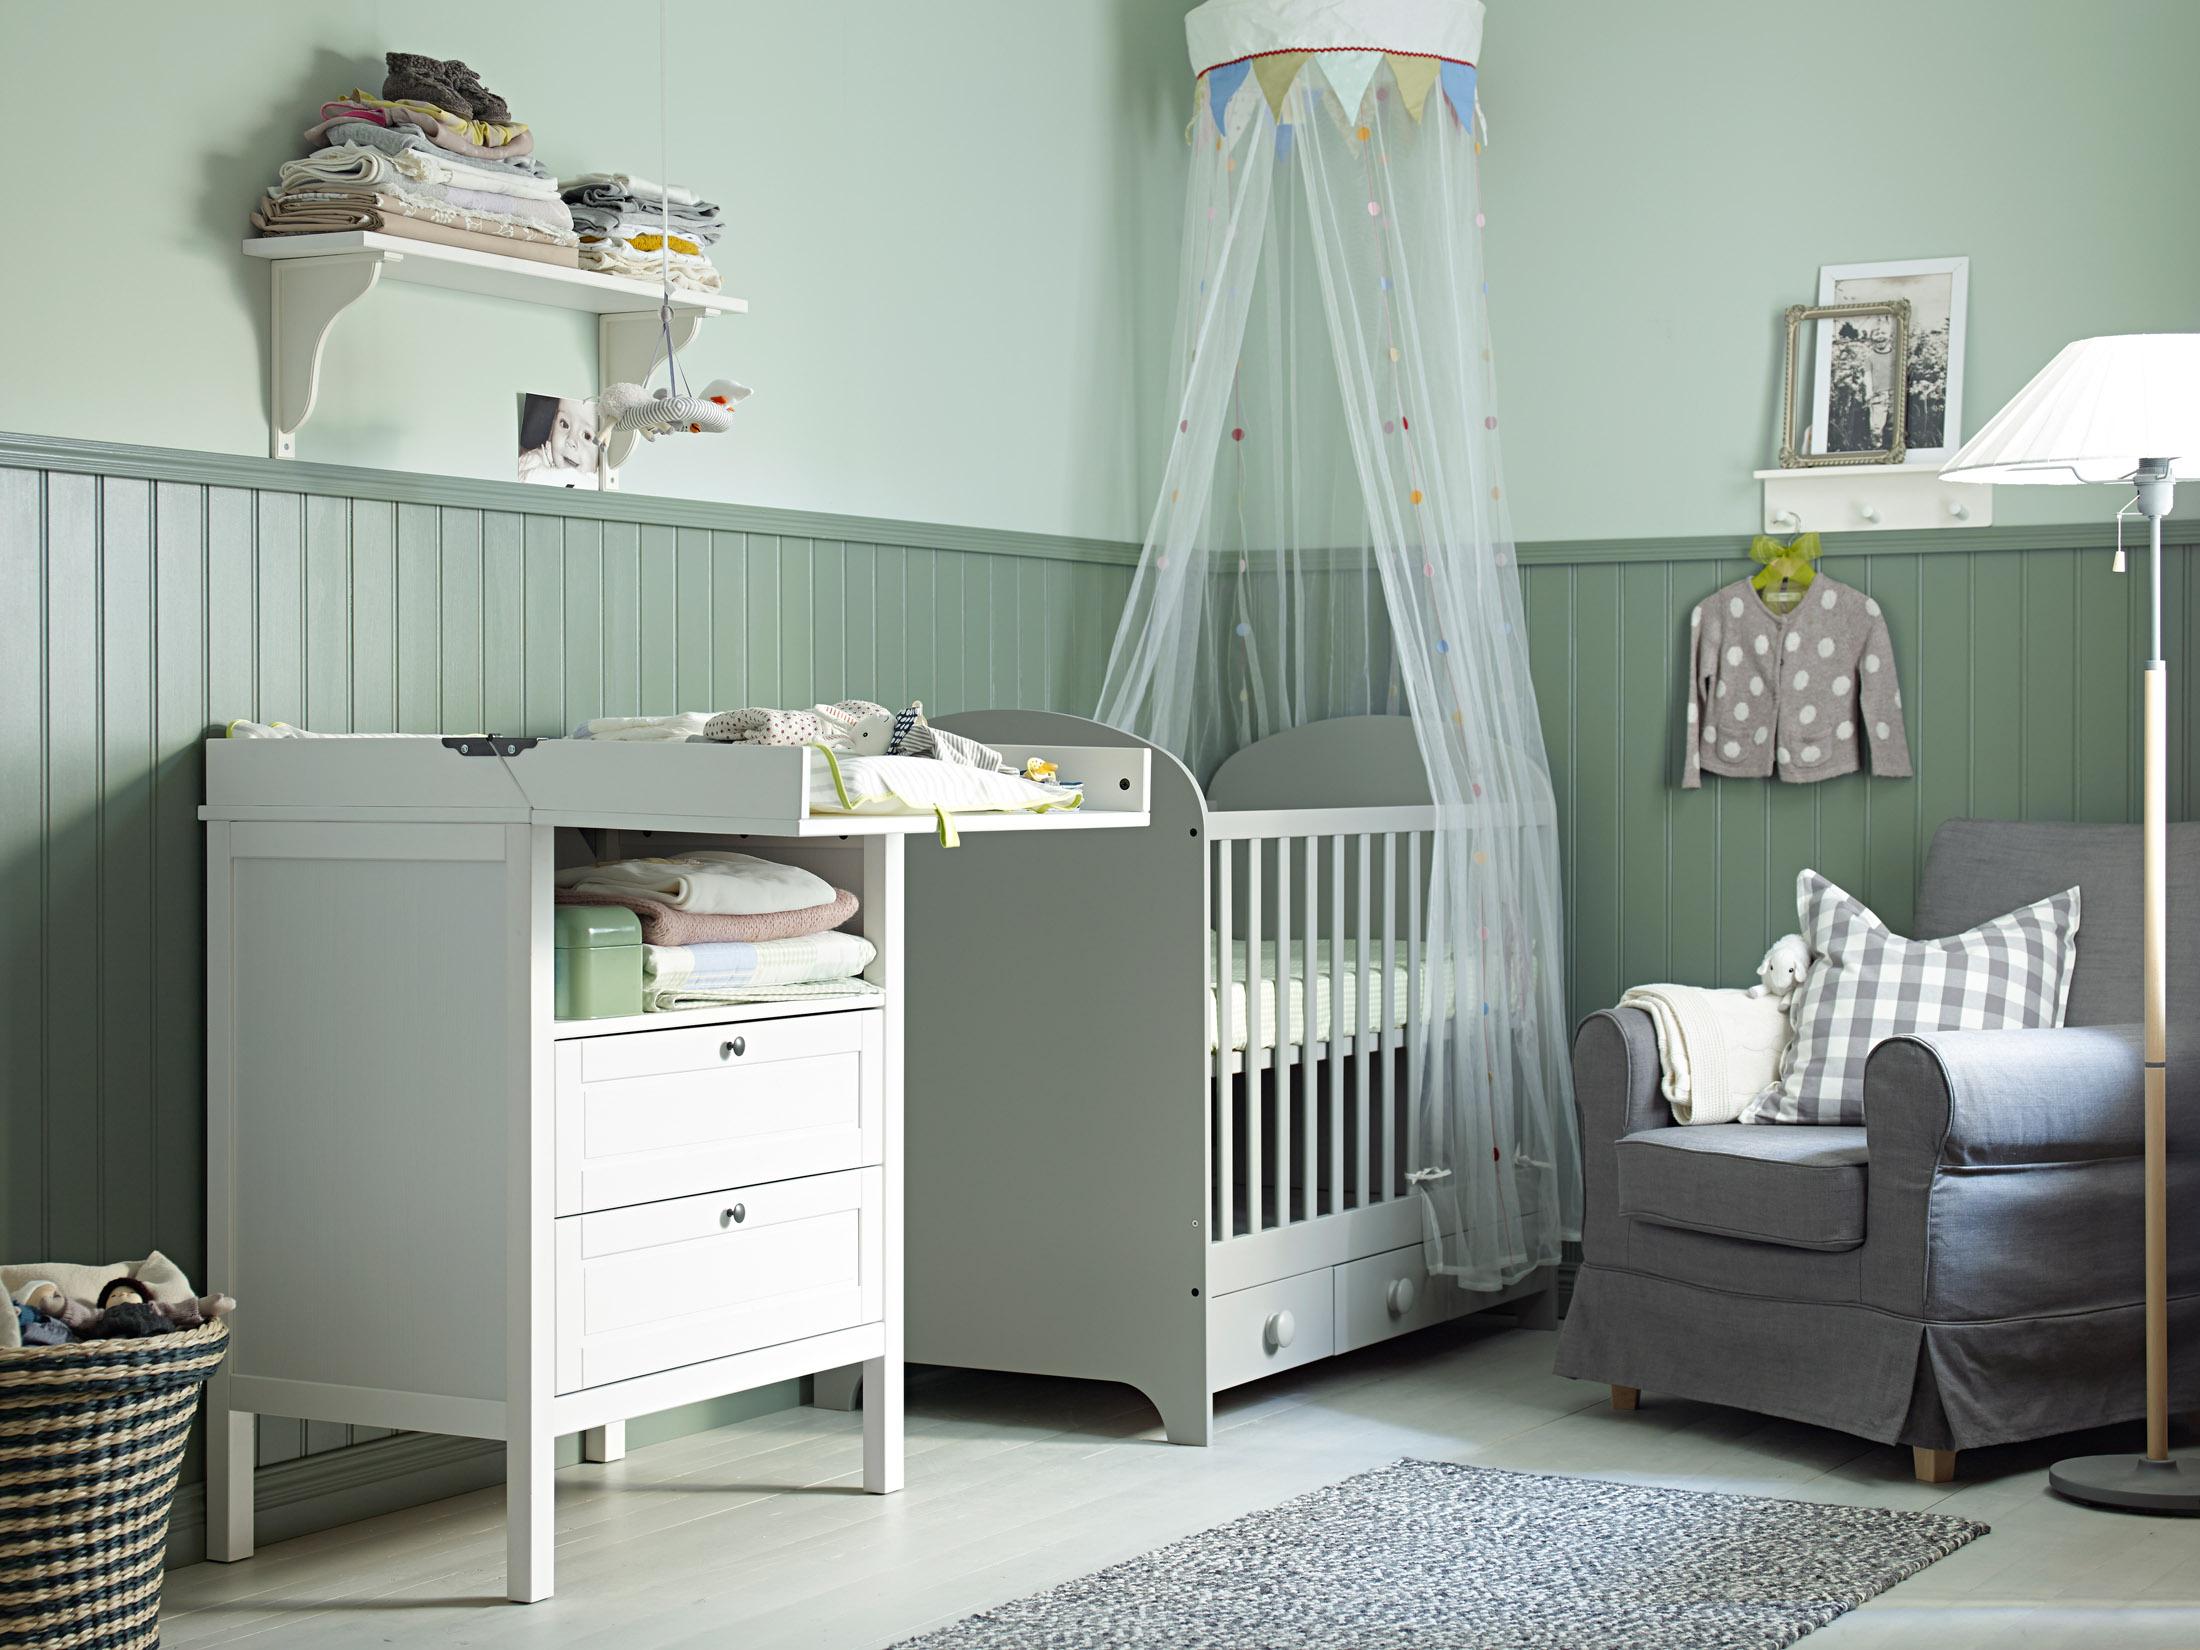 Babybett mit Baldachin #sessel #ikea #babybett #wickelkommode #babyzimmer #stillsessel ©Inter IKEA Systems B.V. 2014